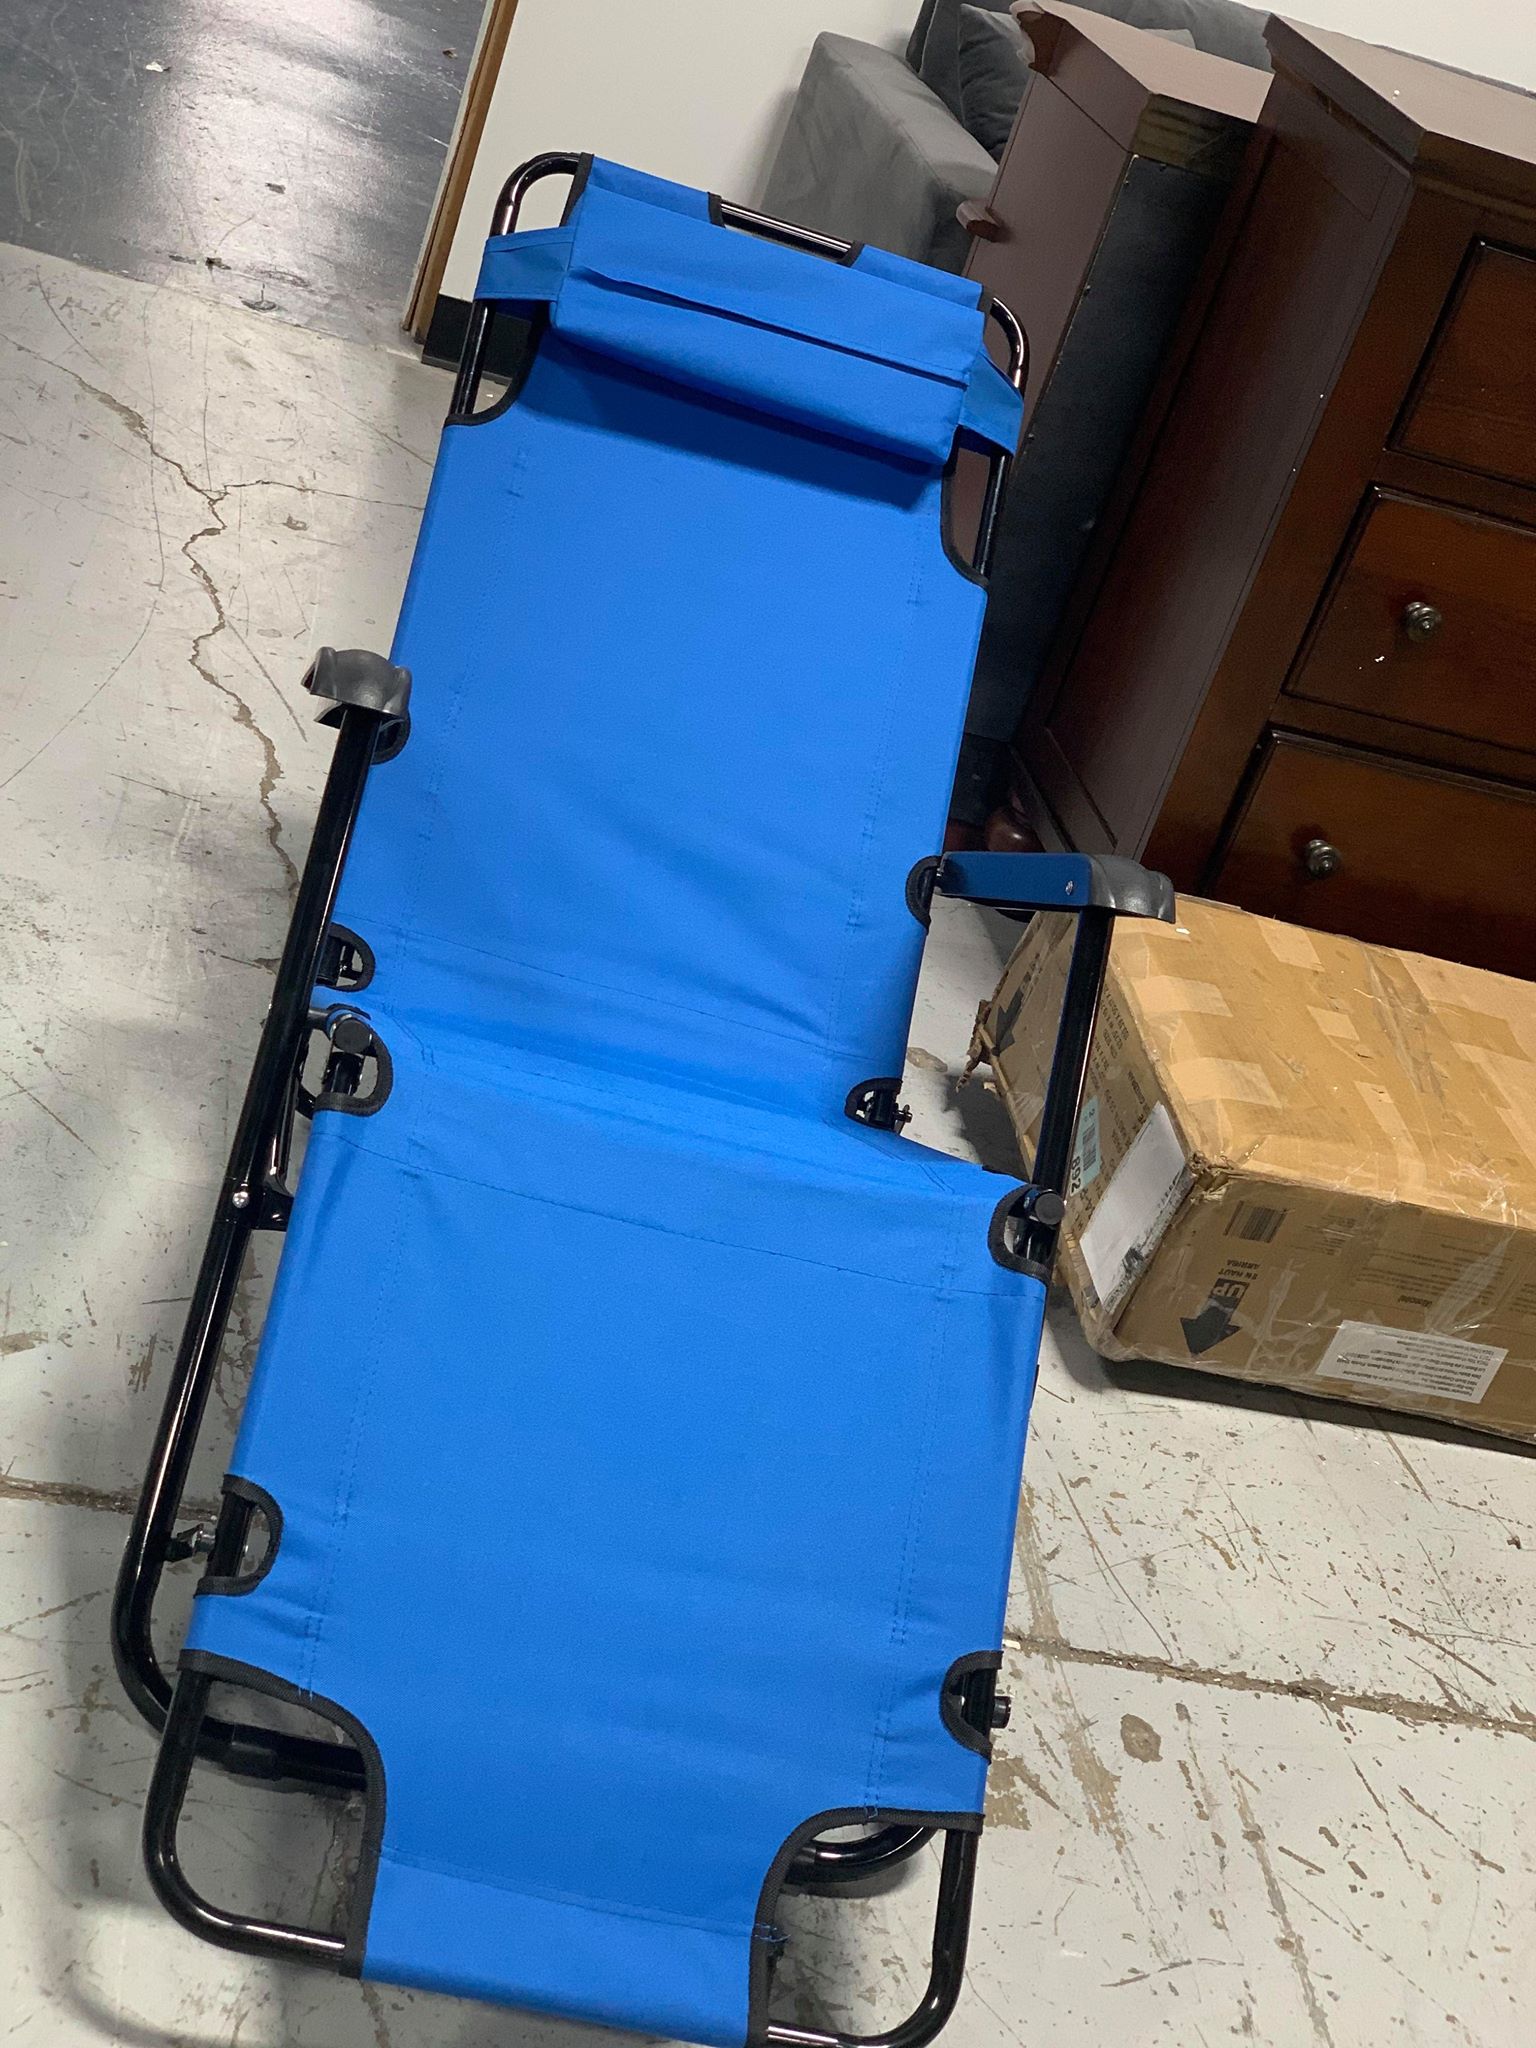 Patio Lounge Chair Folding Cot (Sea Blue) #LX679